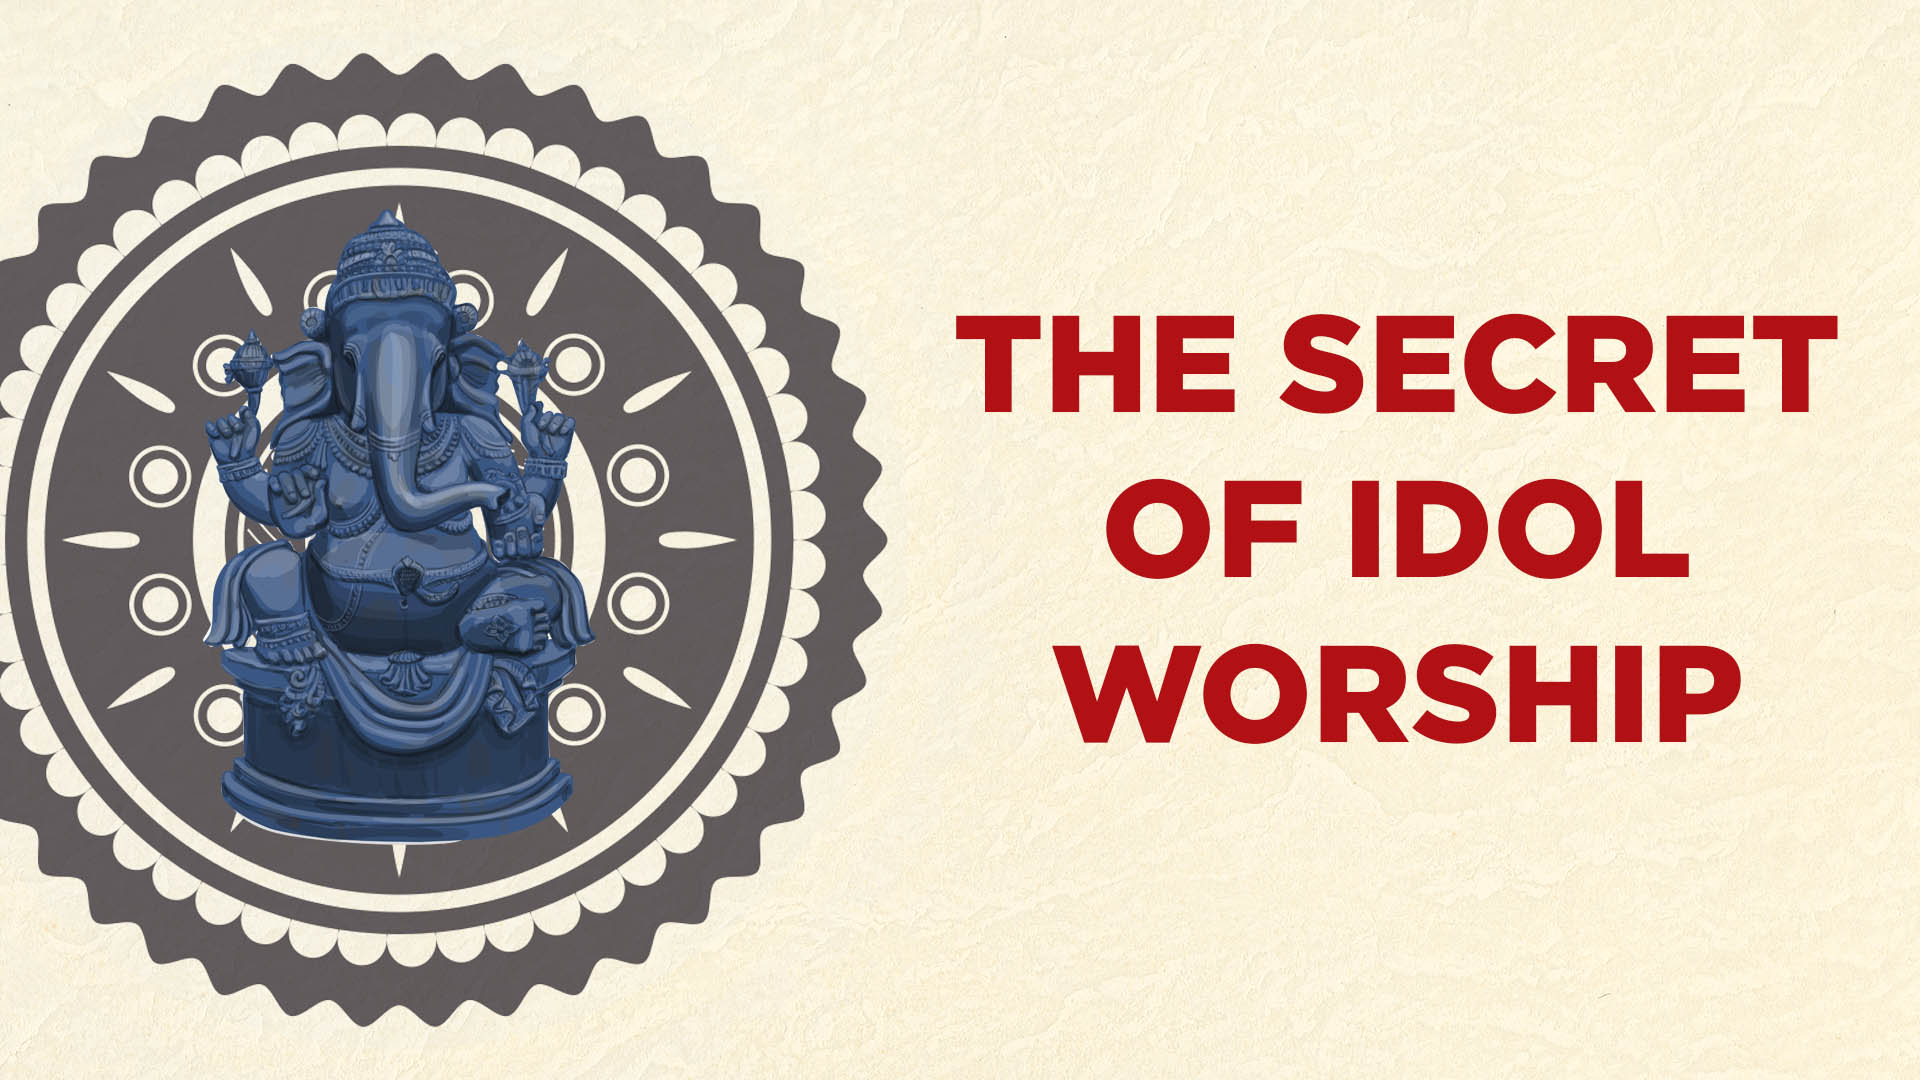 The secret of idol worship